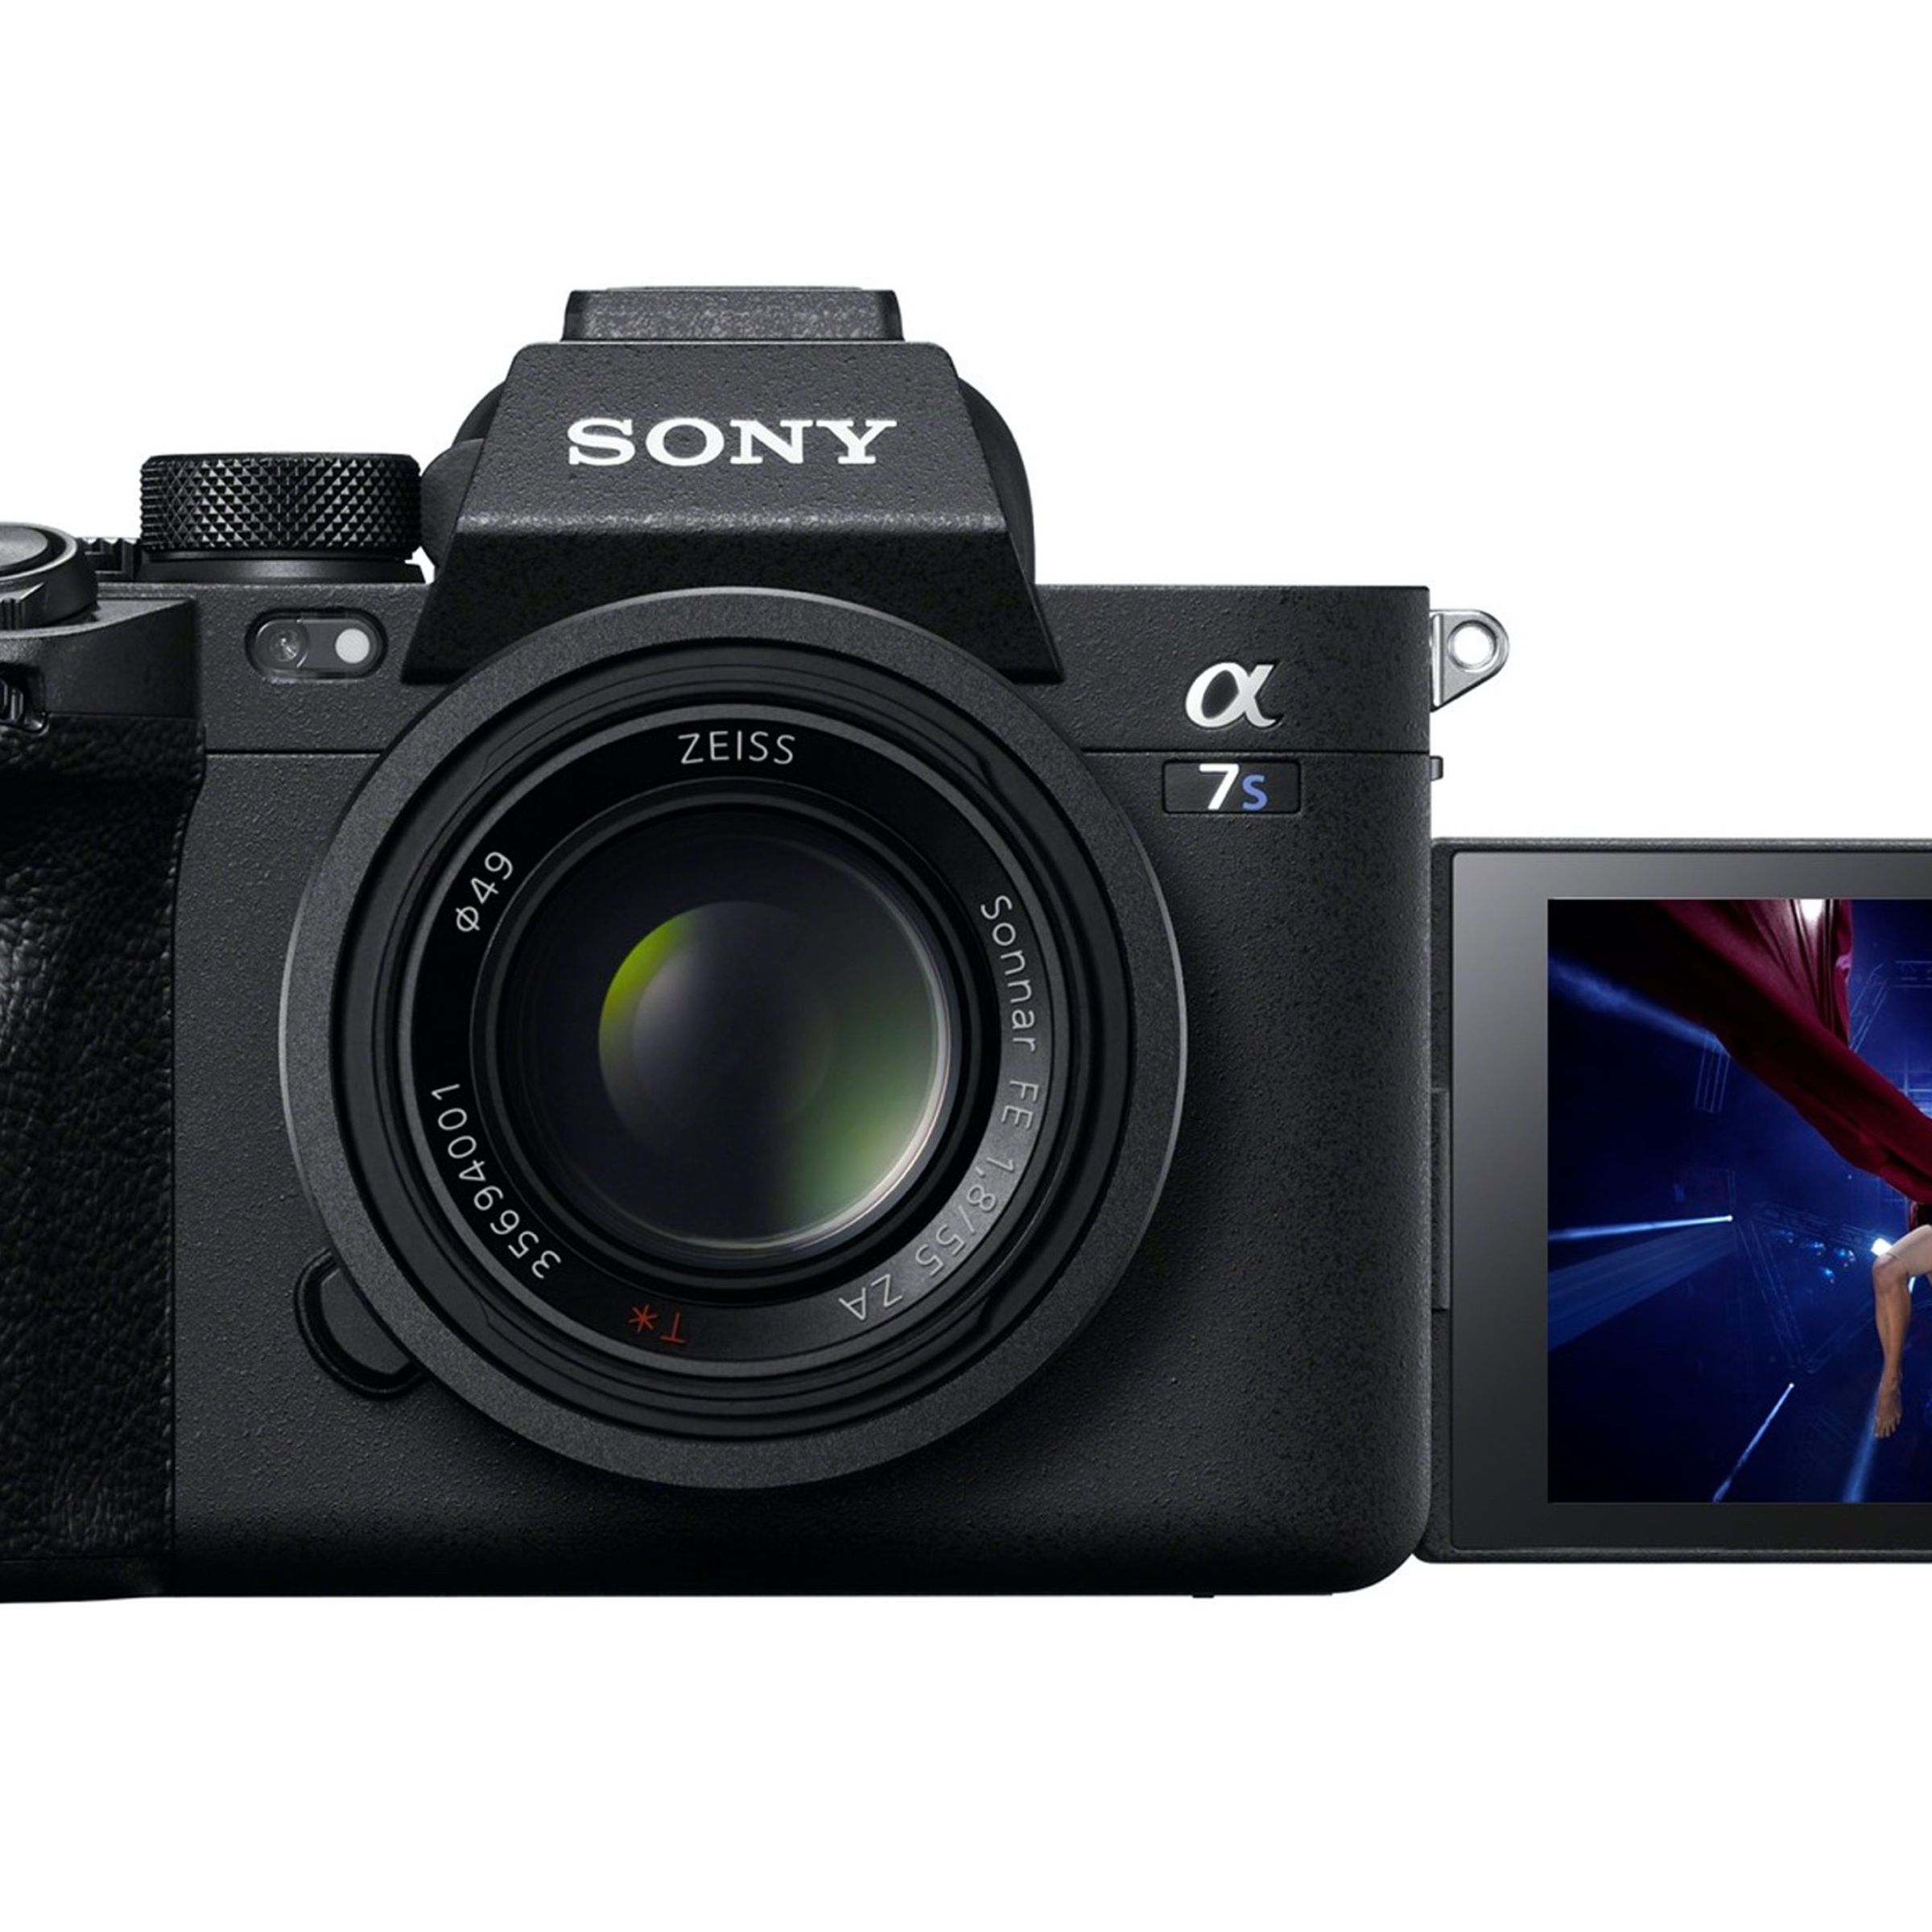 Sony’s A7S Mark III has a familiar 12-megapixel 4K full-frame sensor.